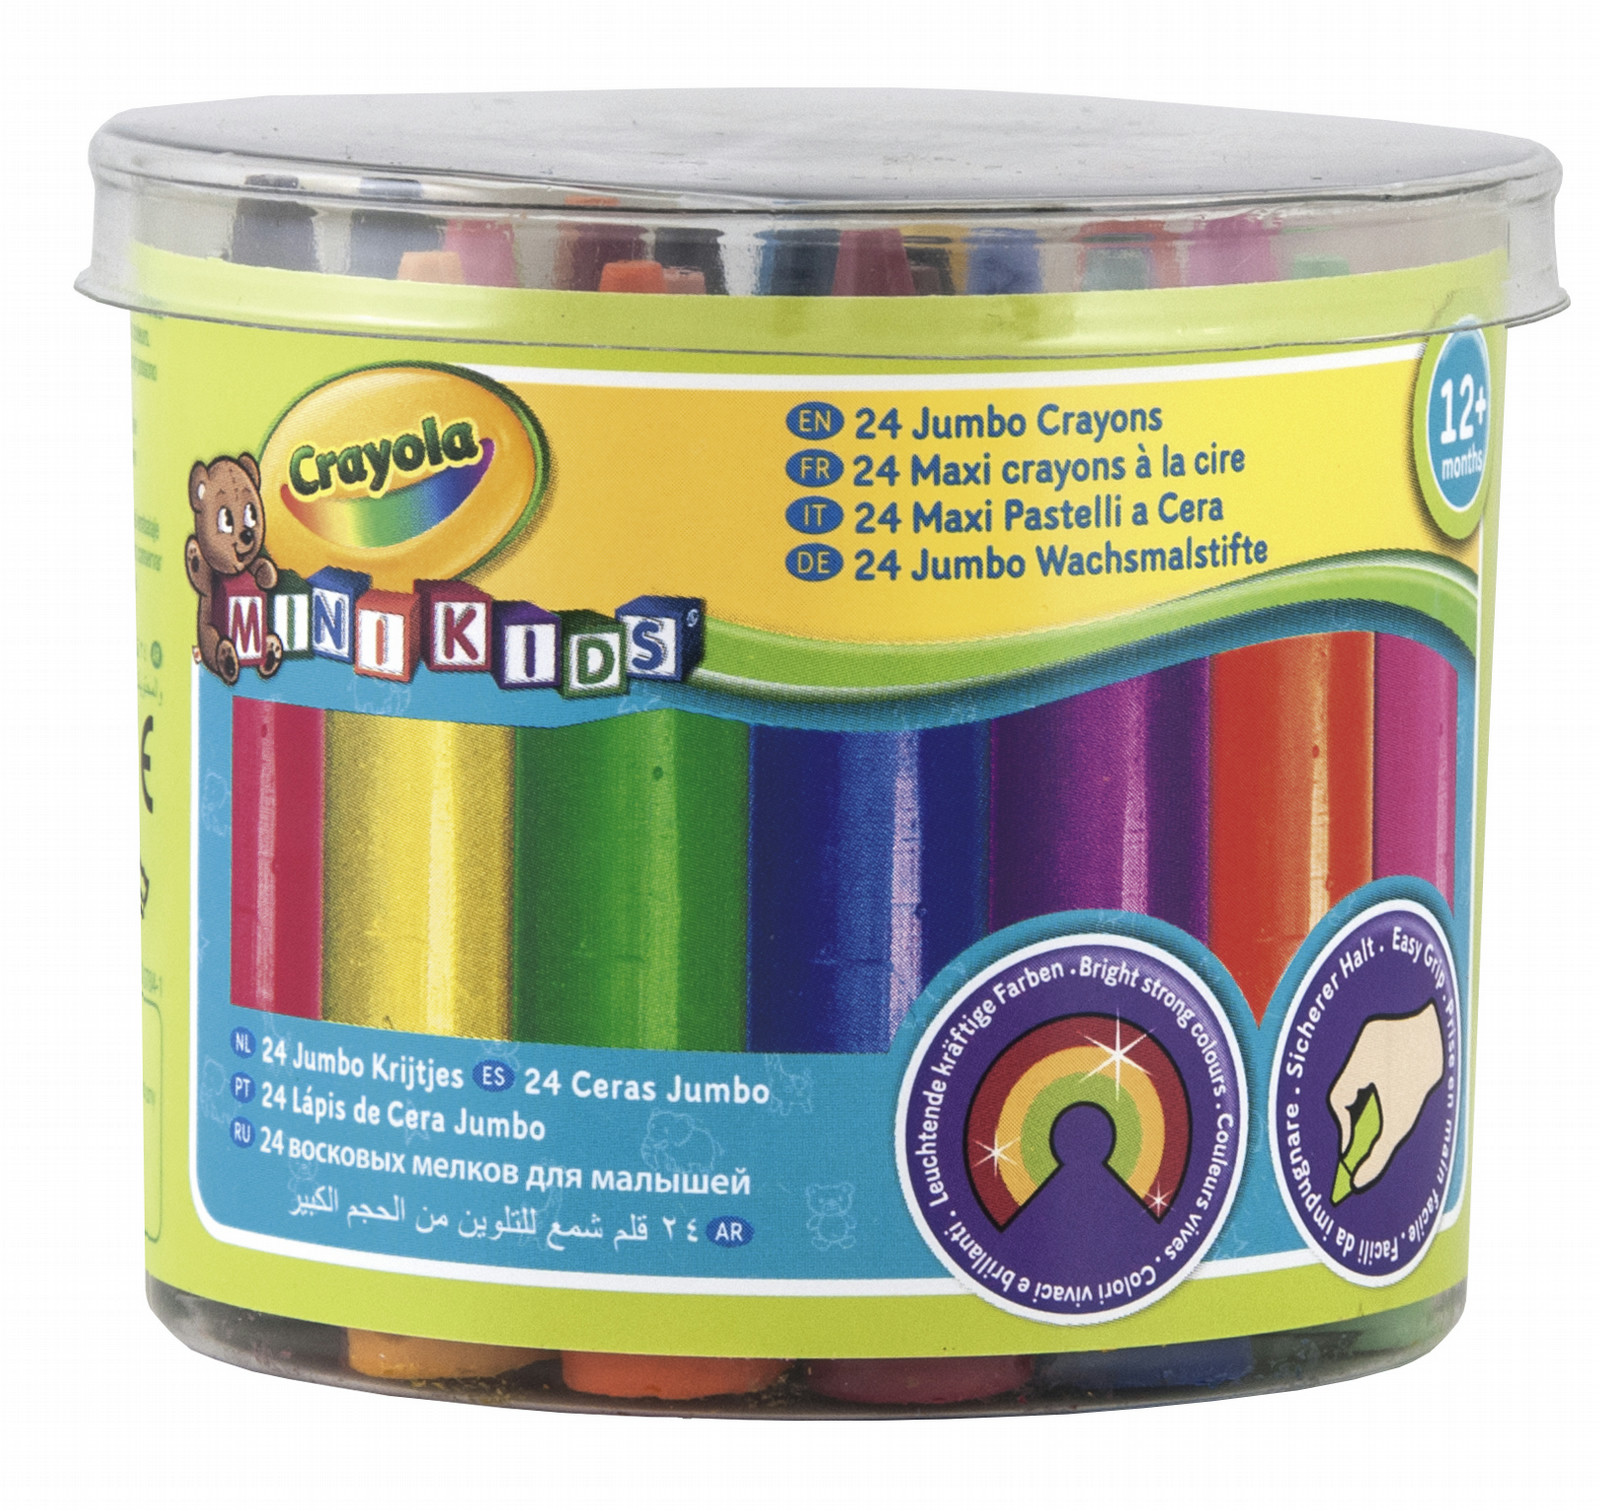 Crayola Kids - 24 Jumbo crayons best Price Technical specifications.